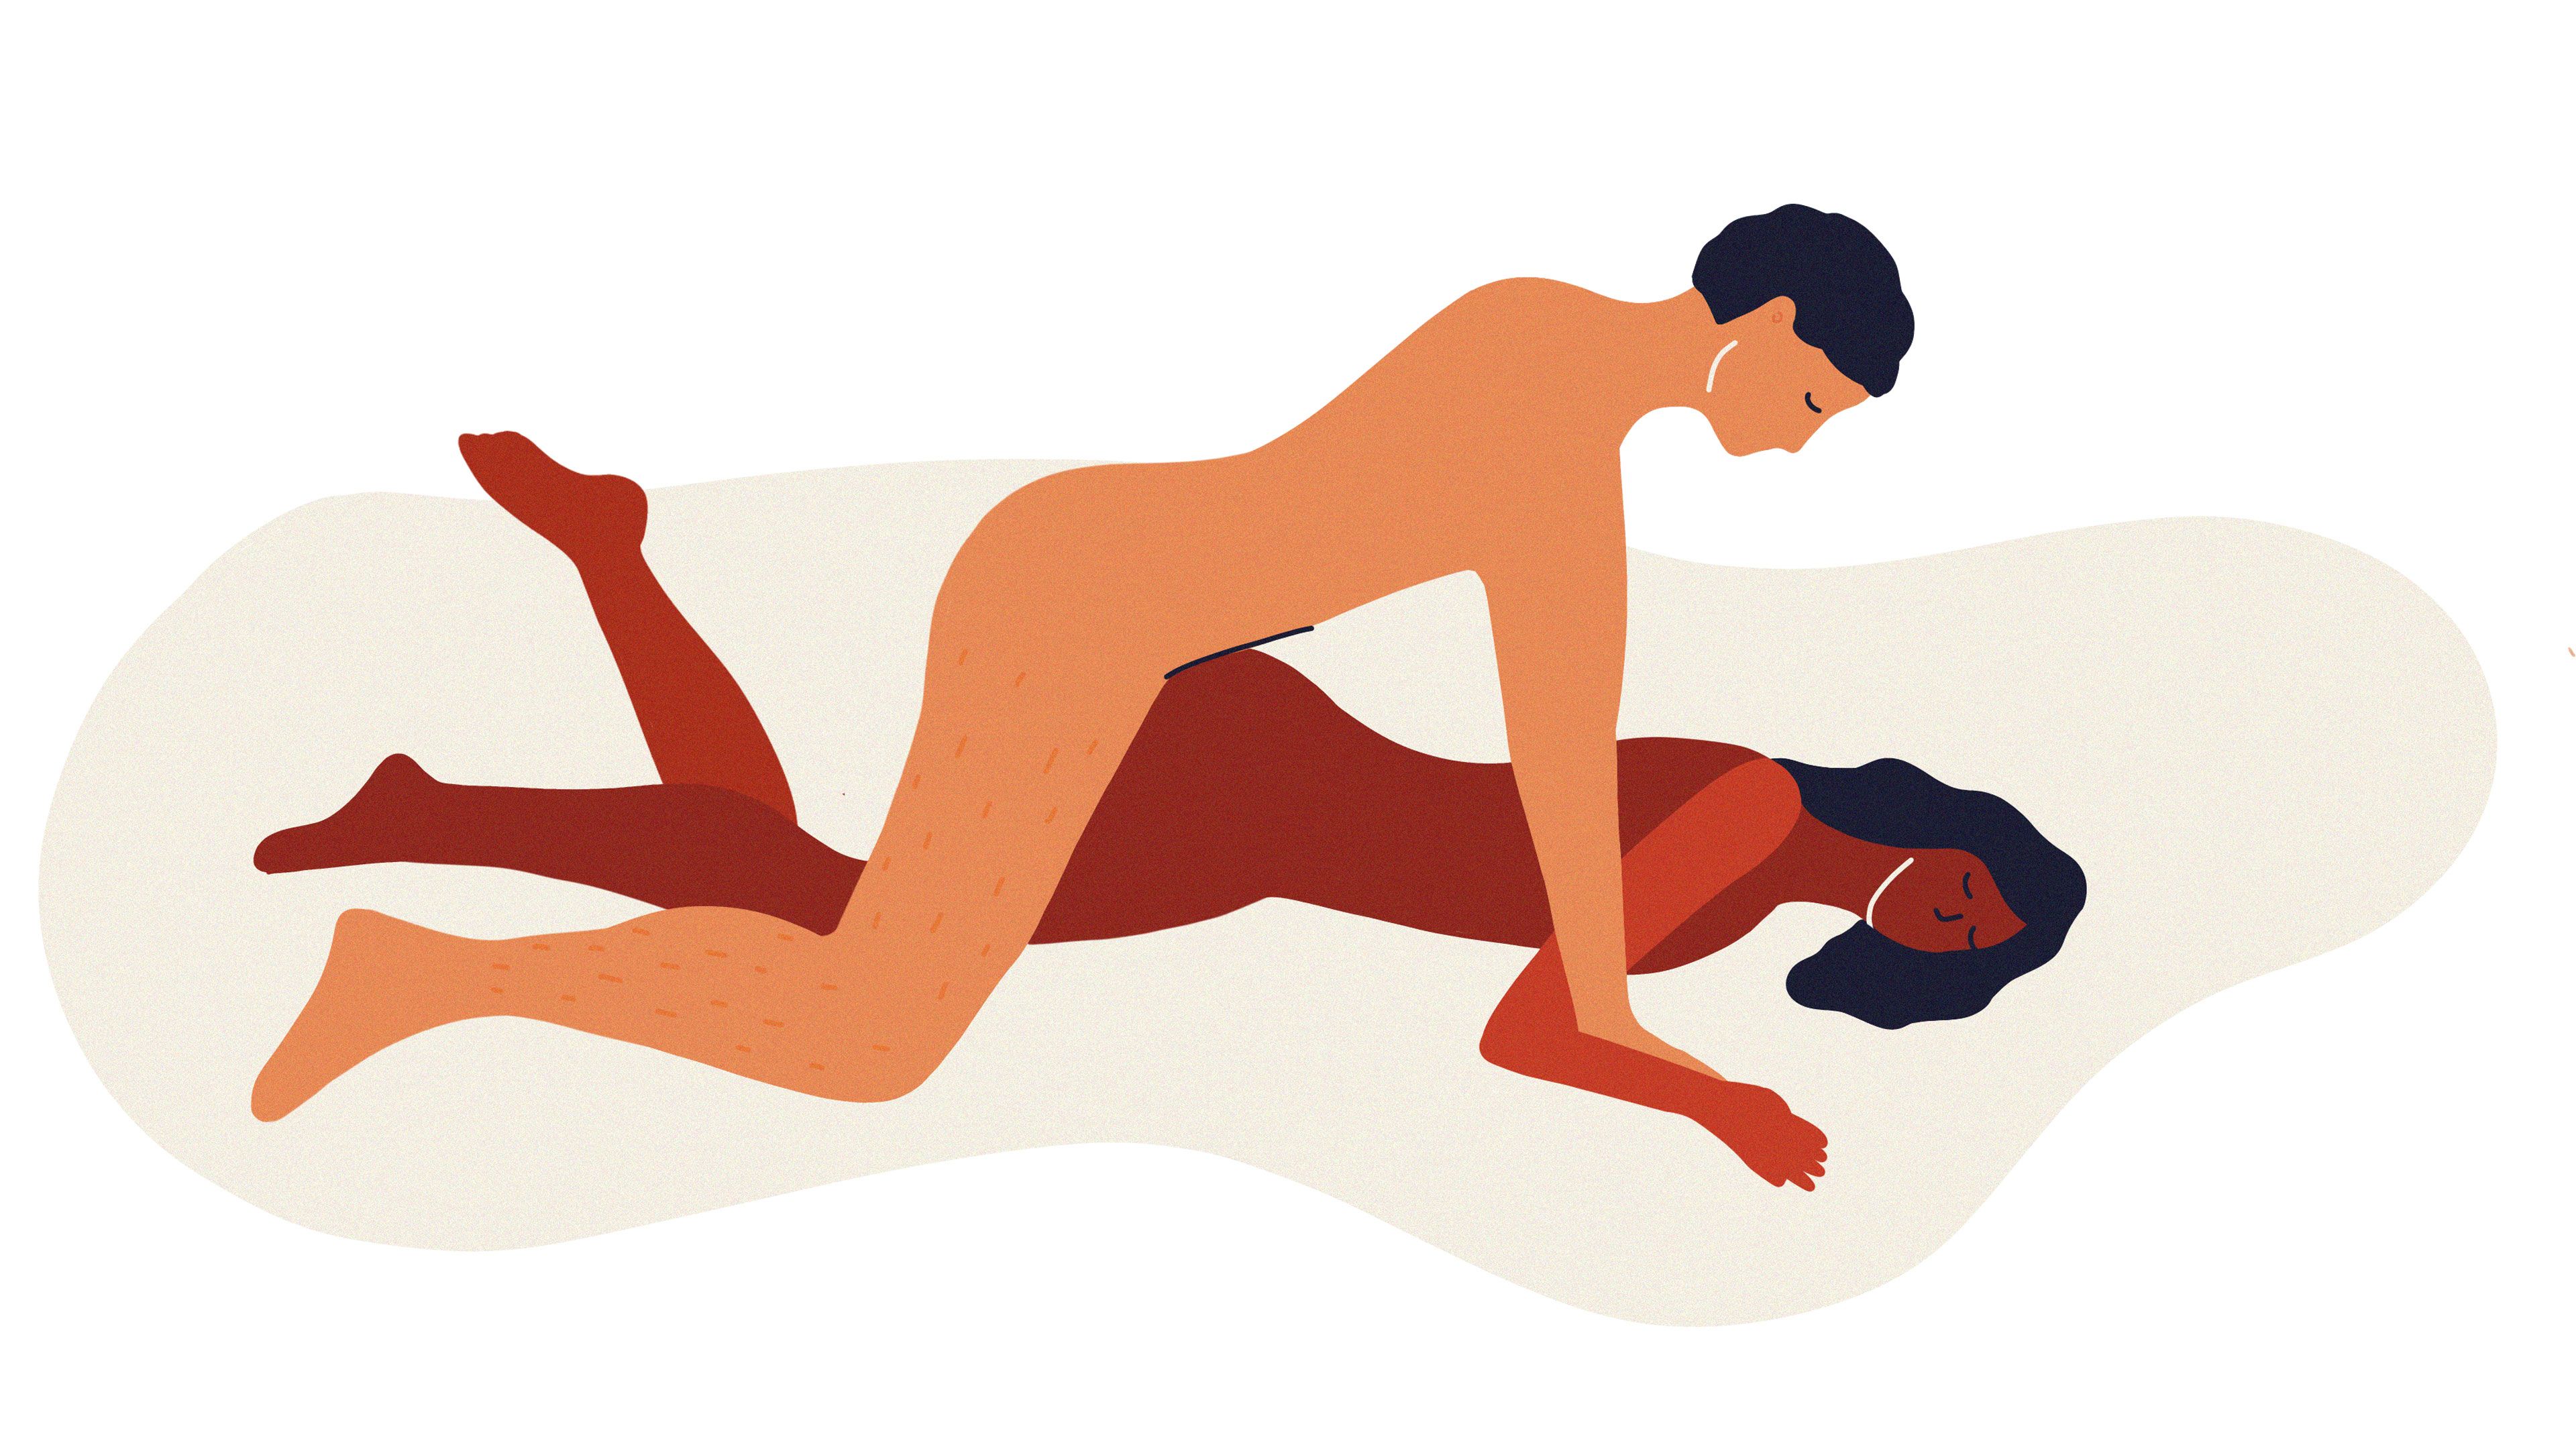 david cramond recommends The Flatiron Sex Position